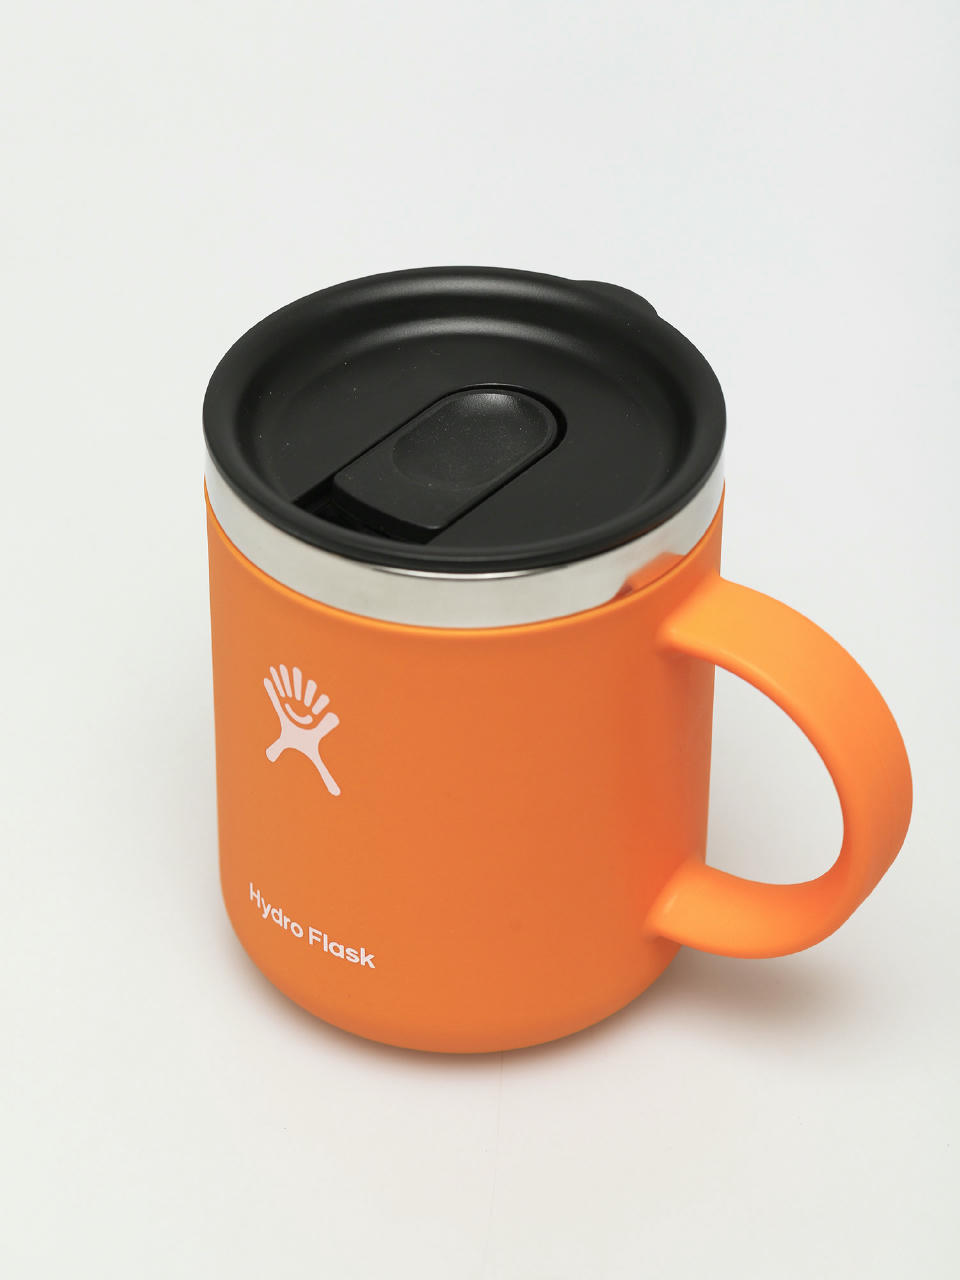 https://static.super-shop.com/1267101-hydro-flask-coffe-mug-354ml-cup-clementine.jpg?w=960